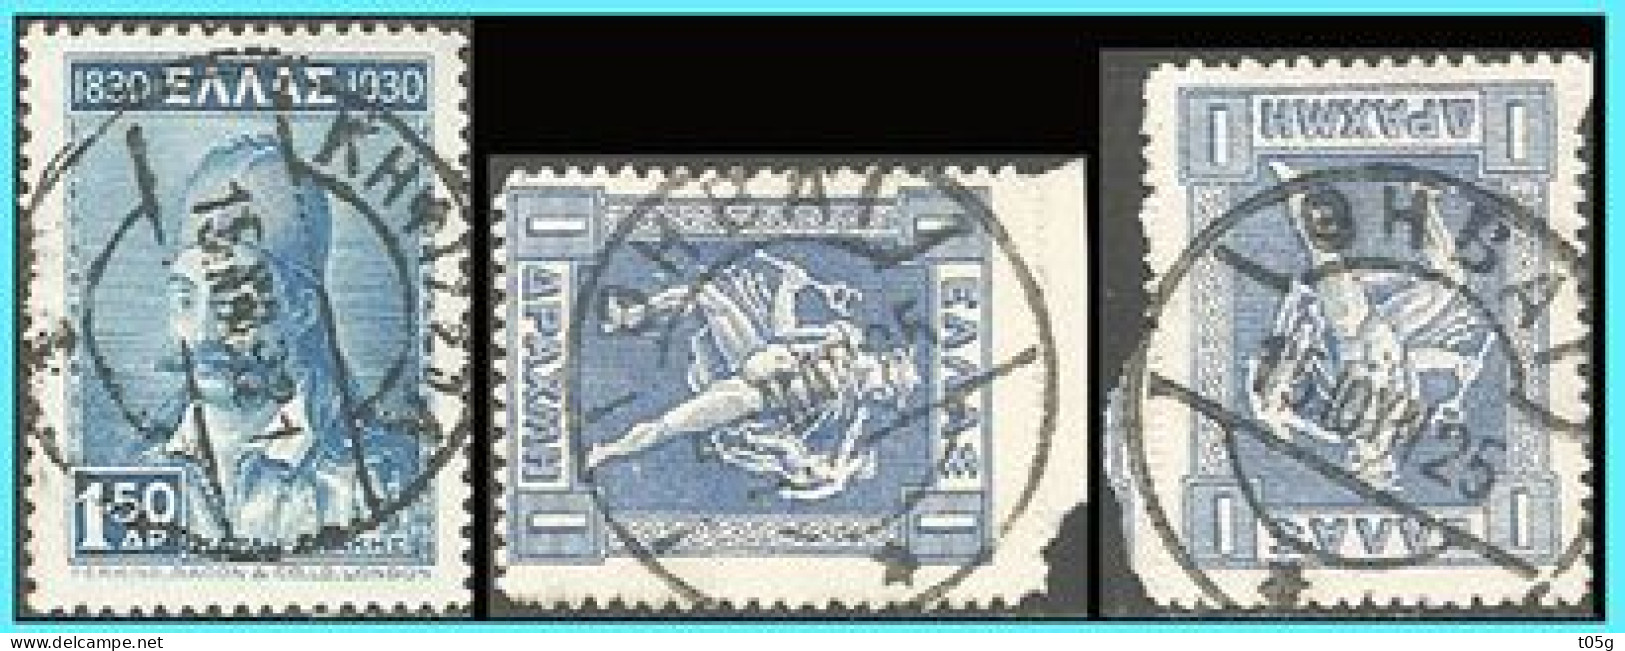 GREECE-GRECE- HELLAS 1913: Canc. (ΚΗΦΙΣΙΑ ΝΟΕ 21) (ΘΗΒΑΙ 1 ΙΟΥΝ 25) On 1drx Lithographic  used - Usados